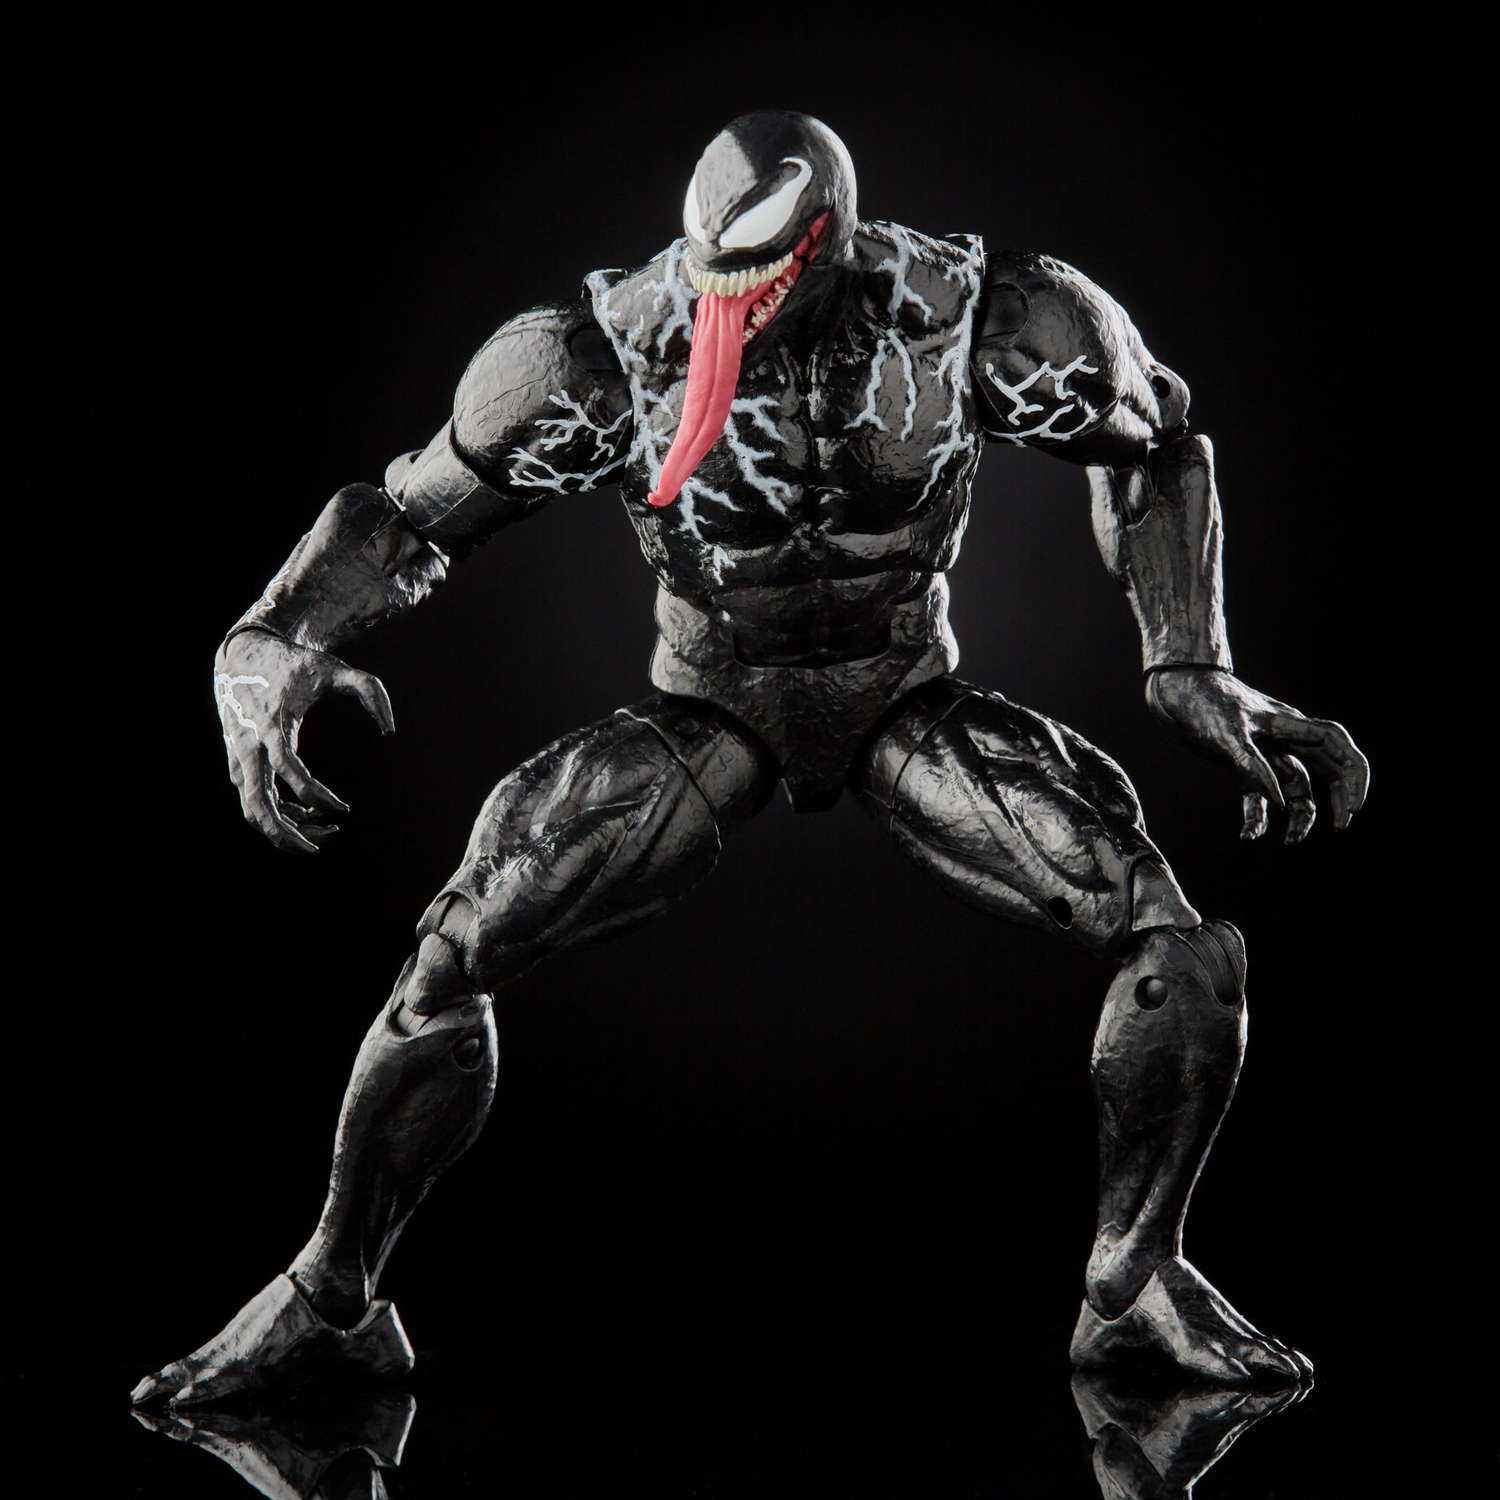 MARVEL LEGENDS SERIES 6-INCH VENOM Figure Assortment - Venom (2).jpg